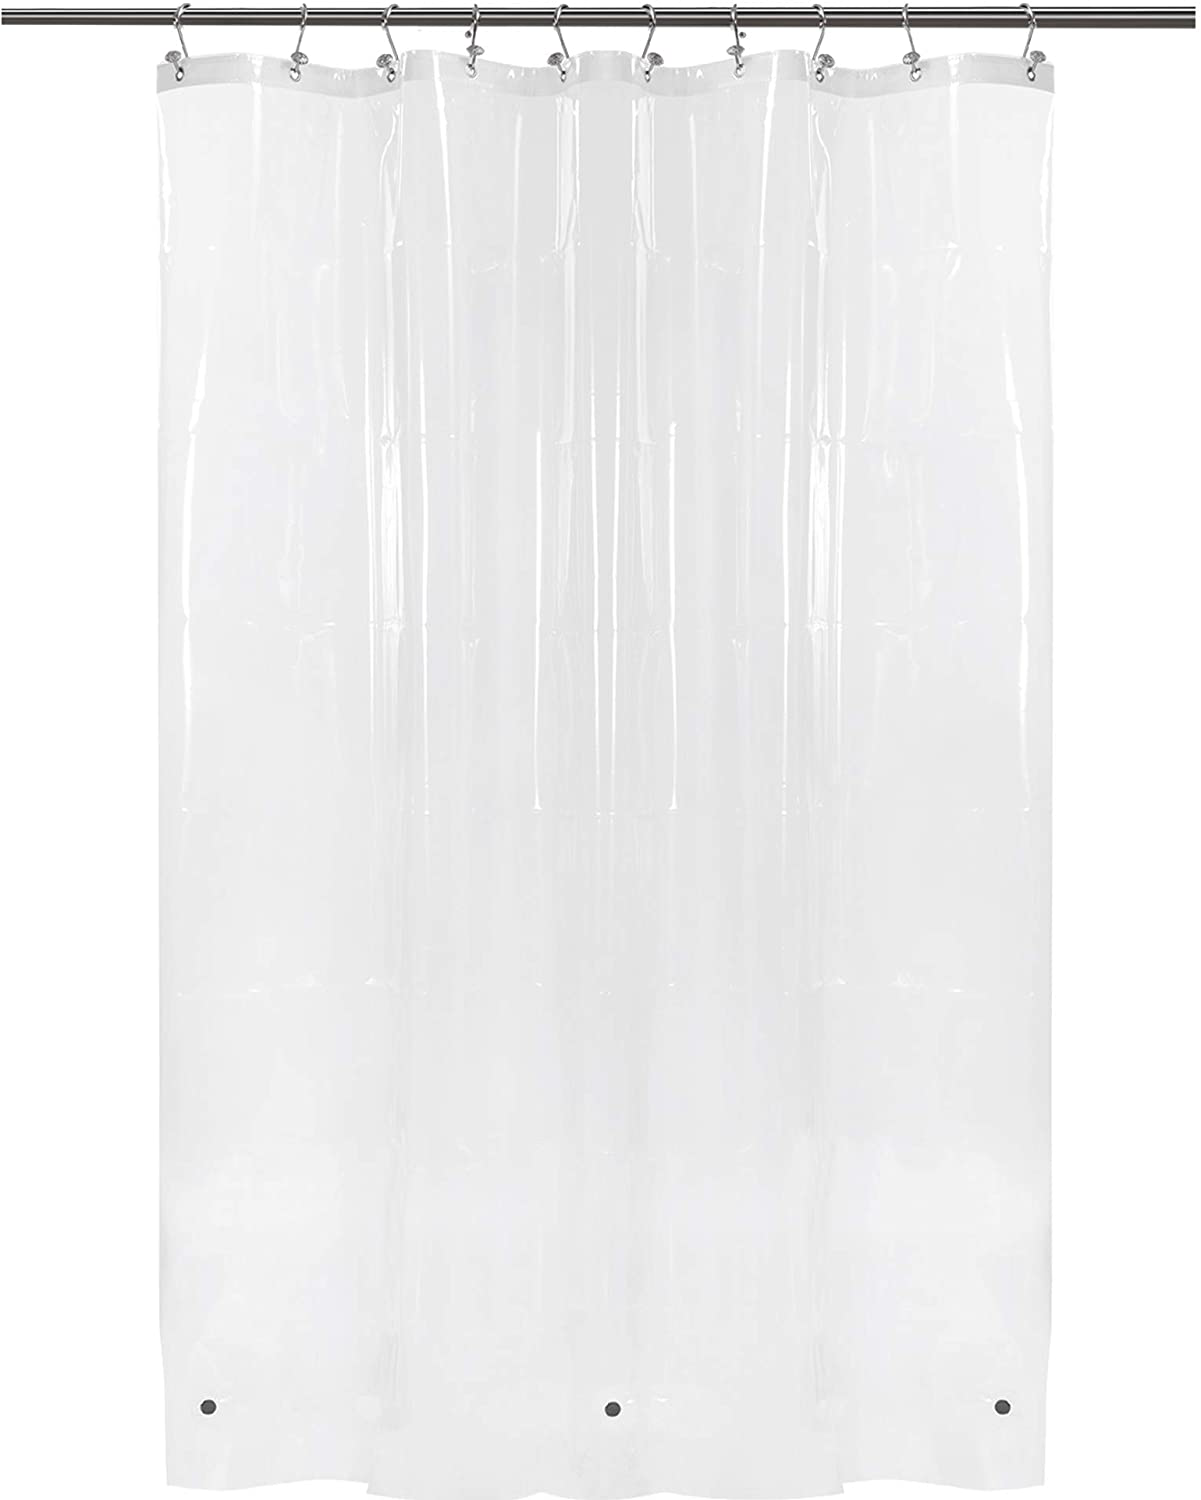 Barossa Design Shower Curtain Liner with 6 Magnets - Waterproof PEVA Shower Liner for Bathroom